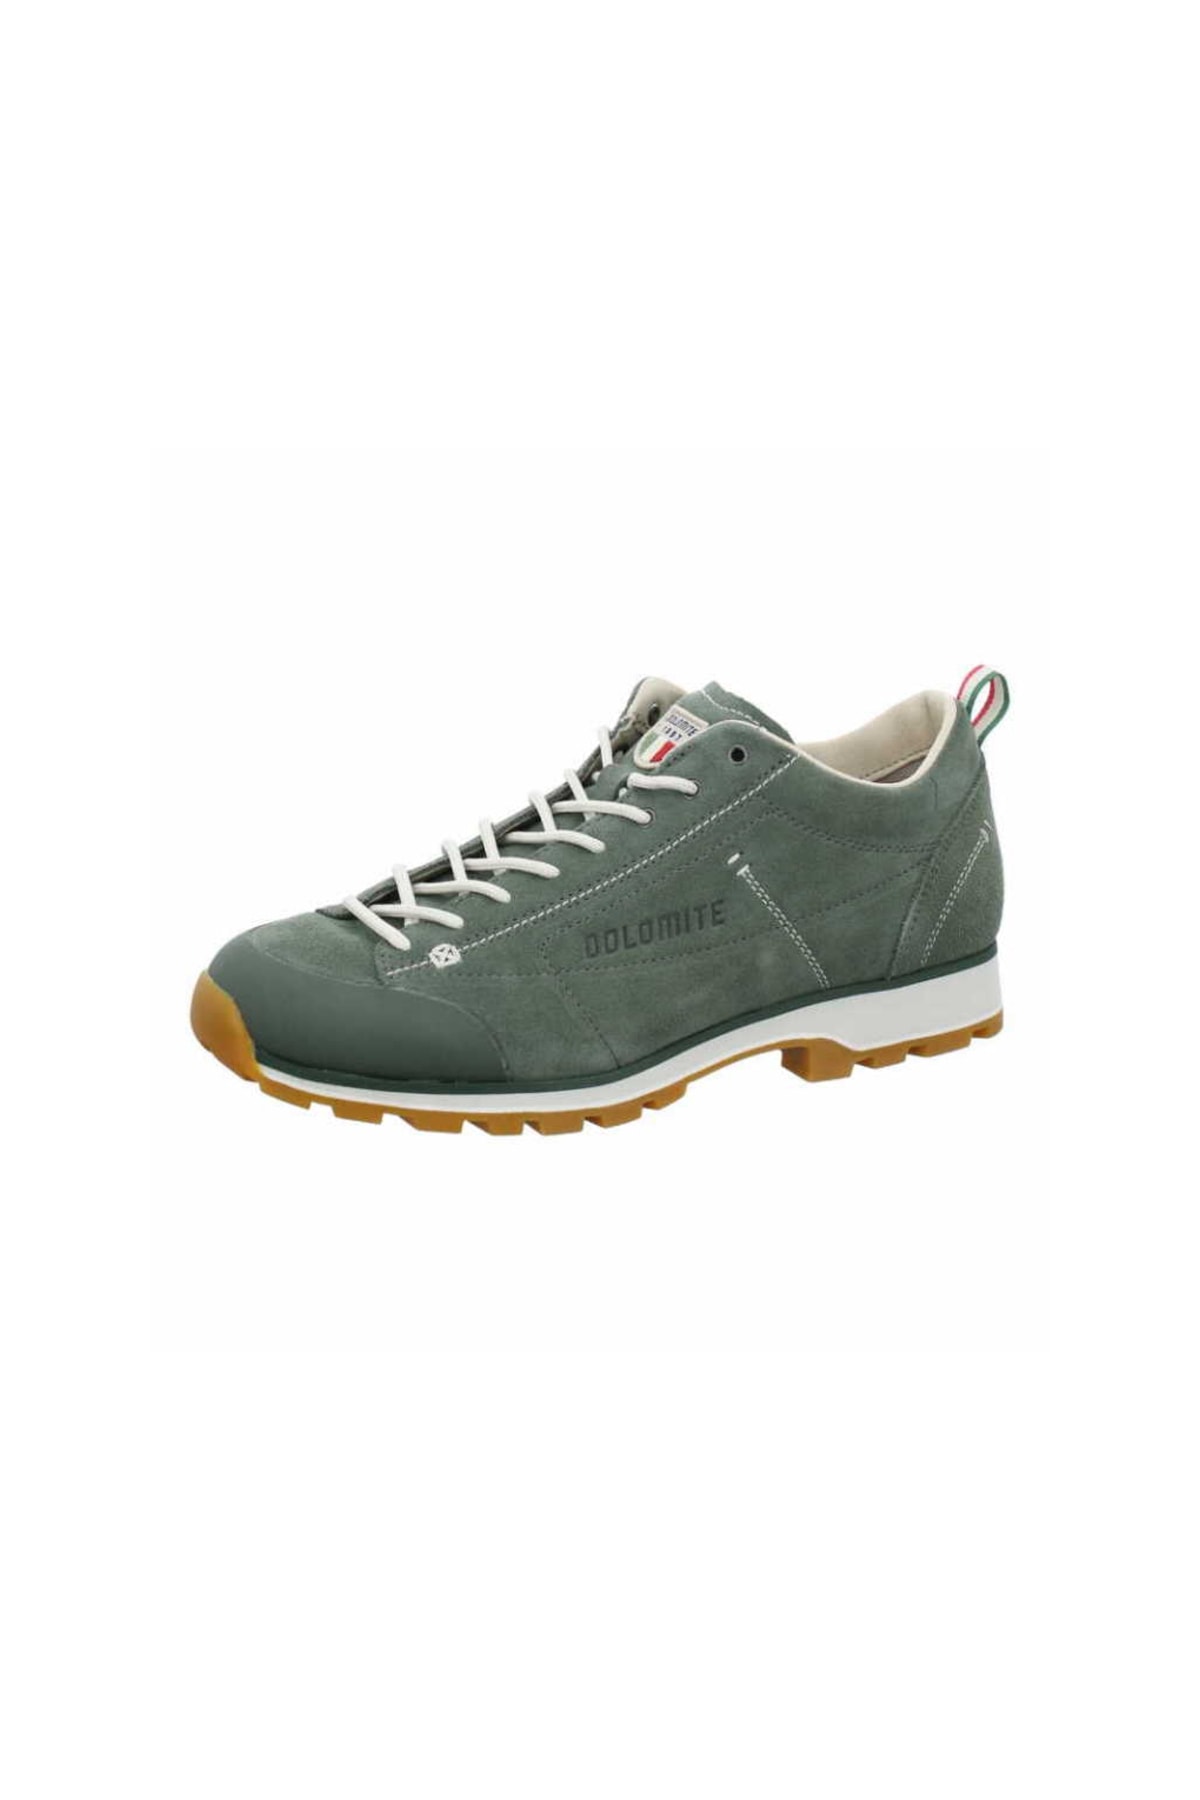 Dolomite Outdoor-Schuhe Grün Flacher Absatz Fast ausverkauft